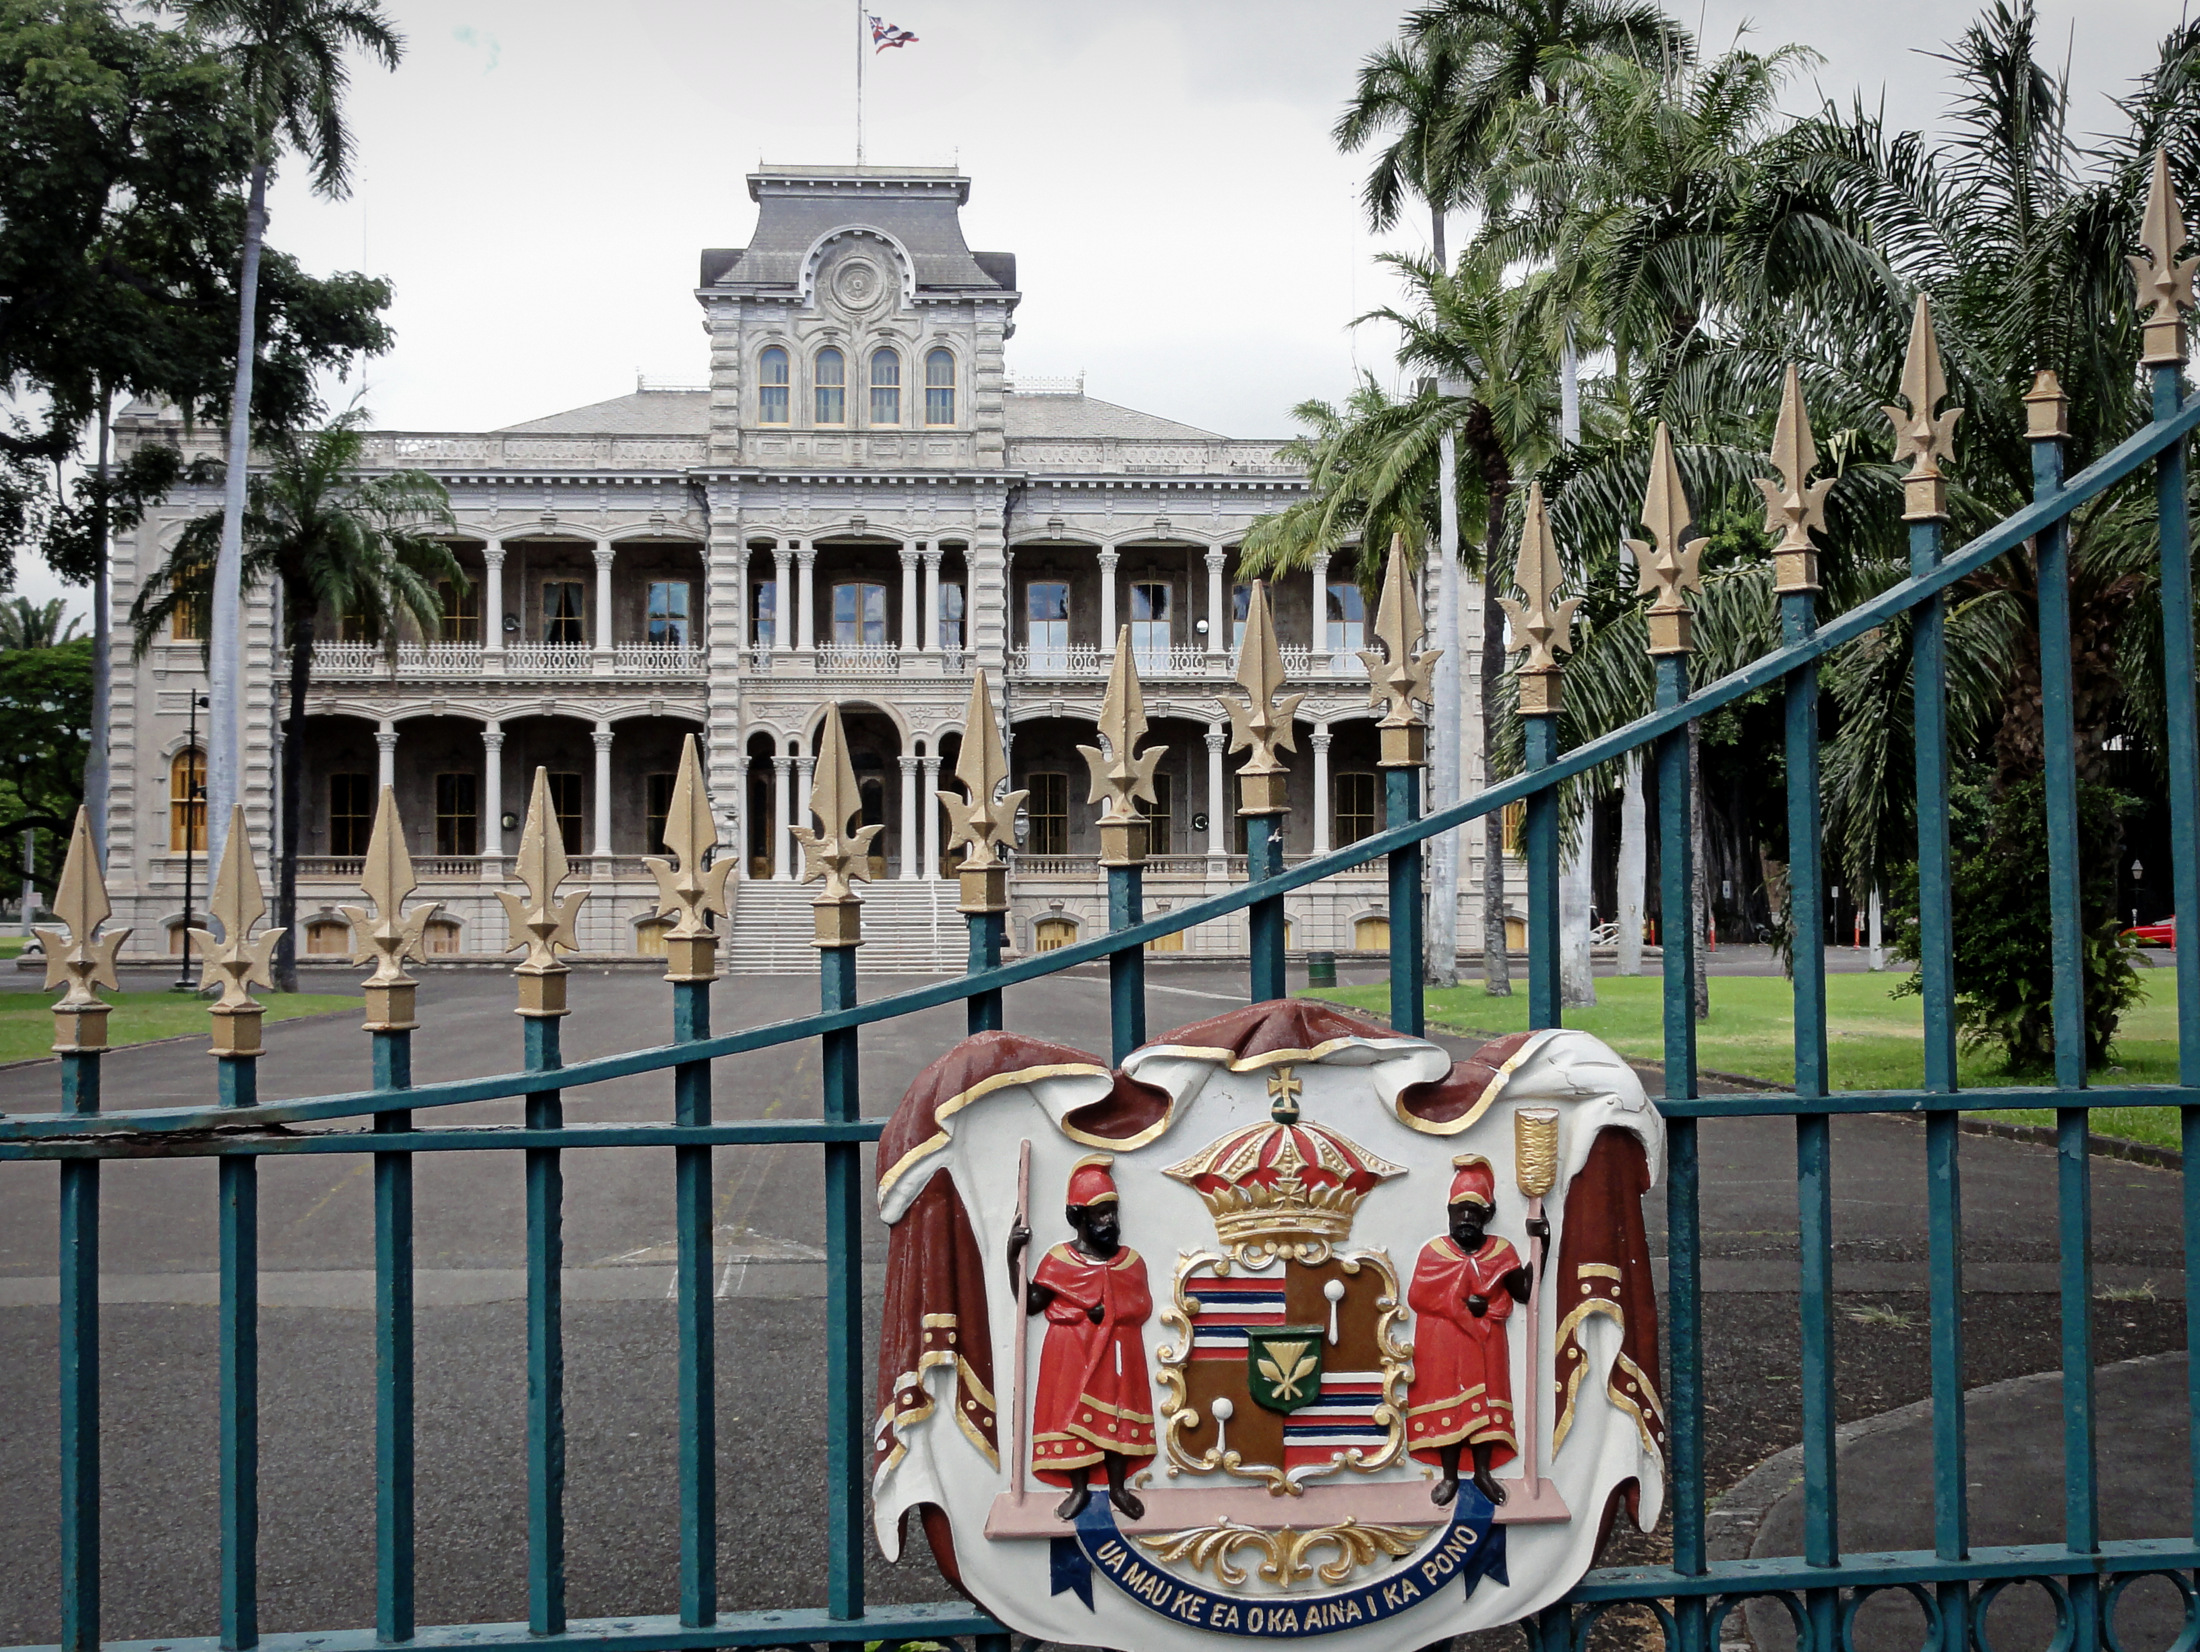 Культурный центр гонолулу 7. Дворец Иолани на Гавайях. Королевский дворец Гавайи. Королевский дворец в Гонолулу. Дворец Иолани Гонолулу Гавайи картинки.